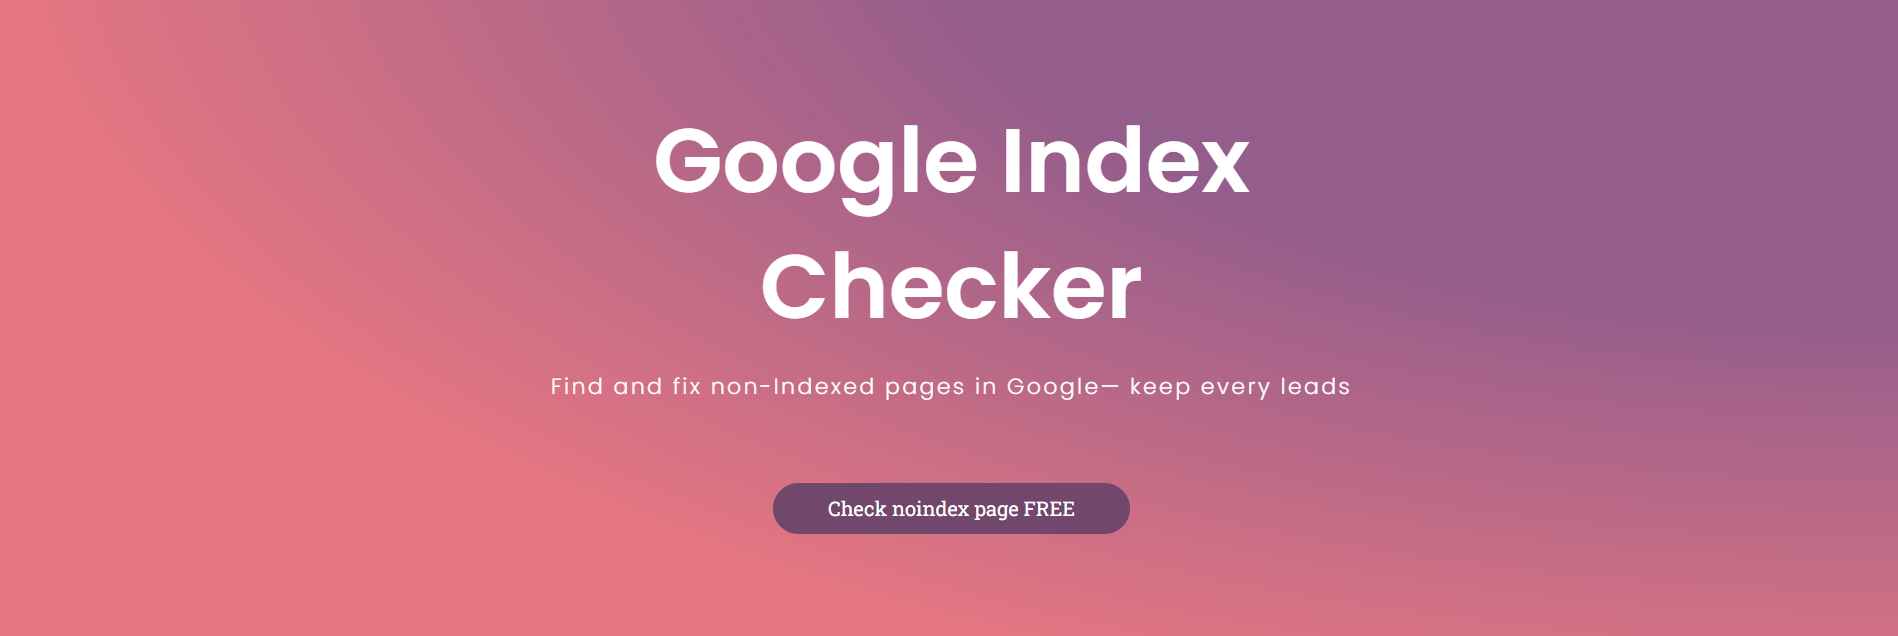 google-index-checker.png